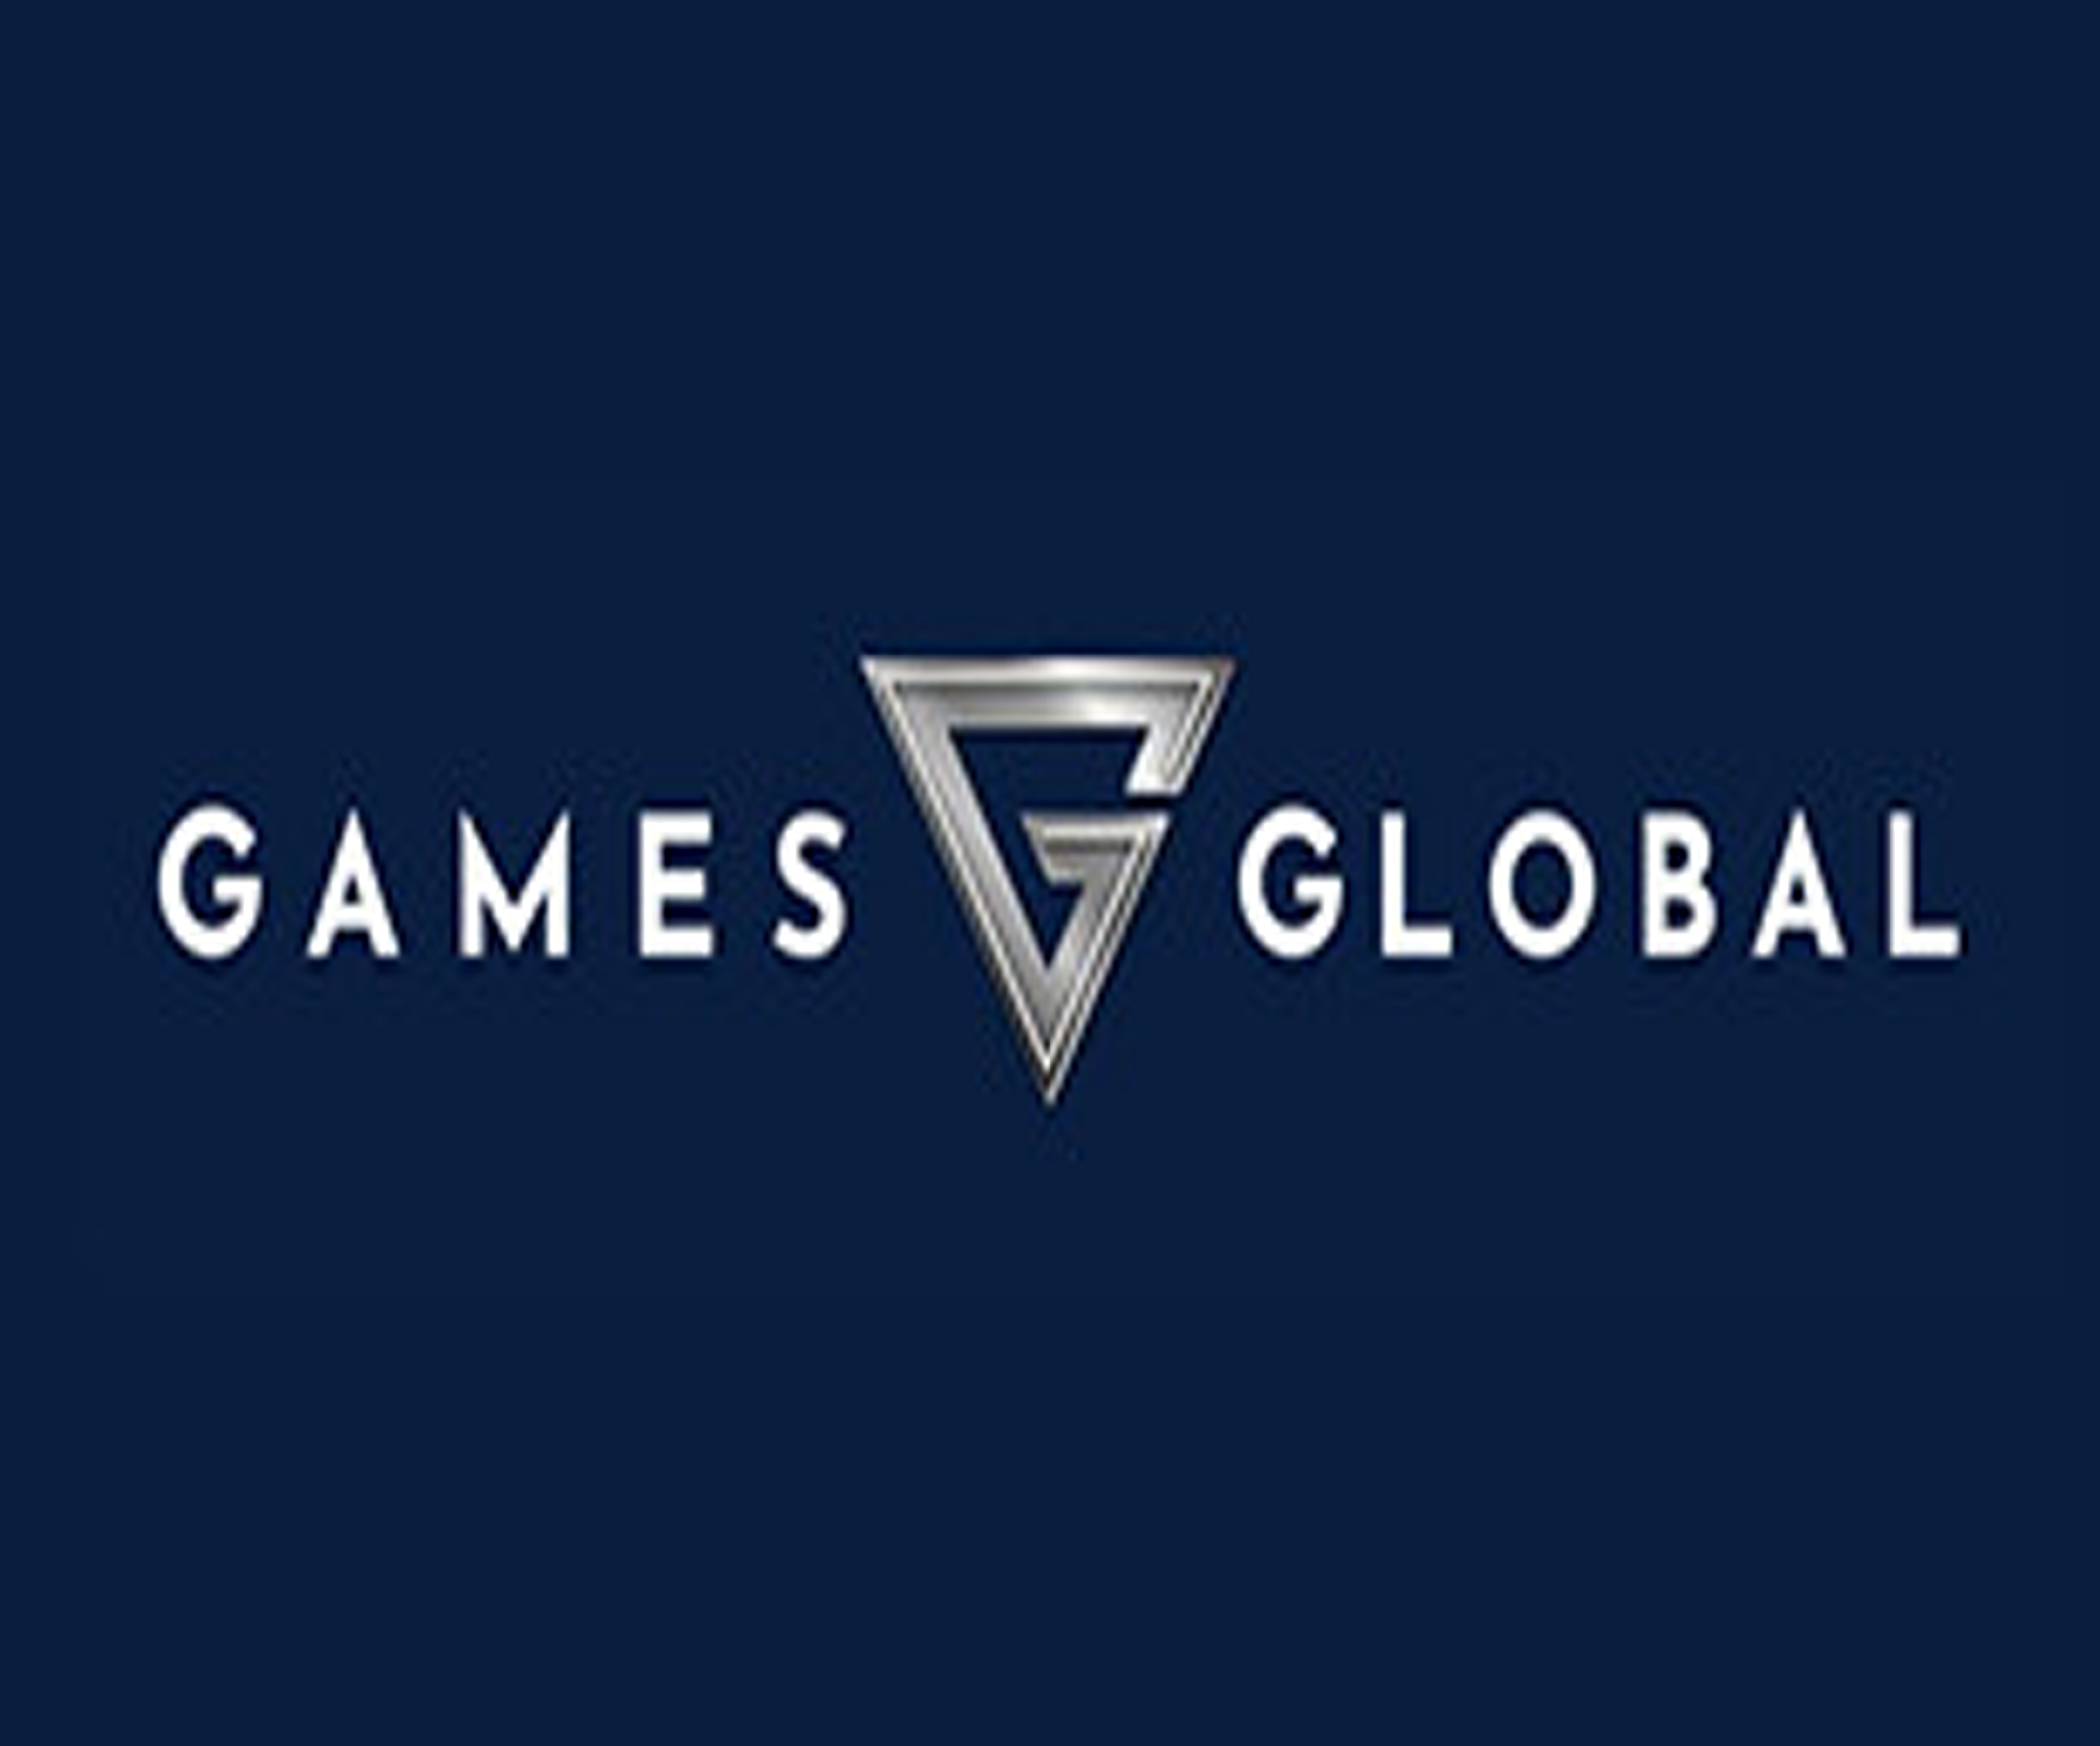 GAMES GLOBAL Slot